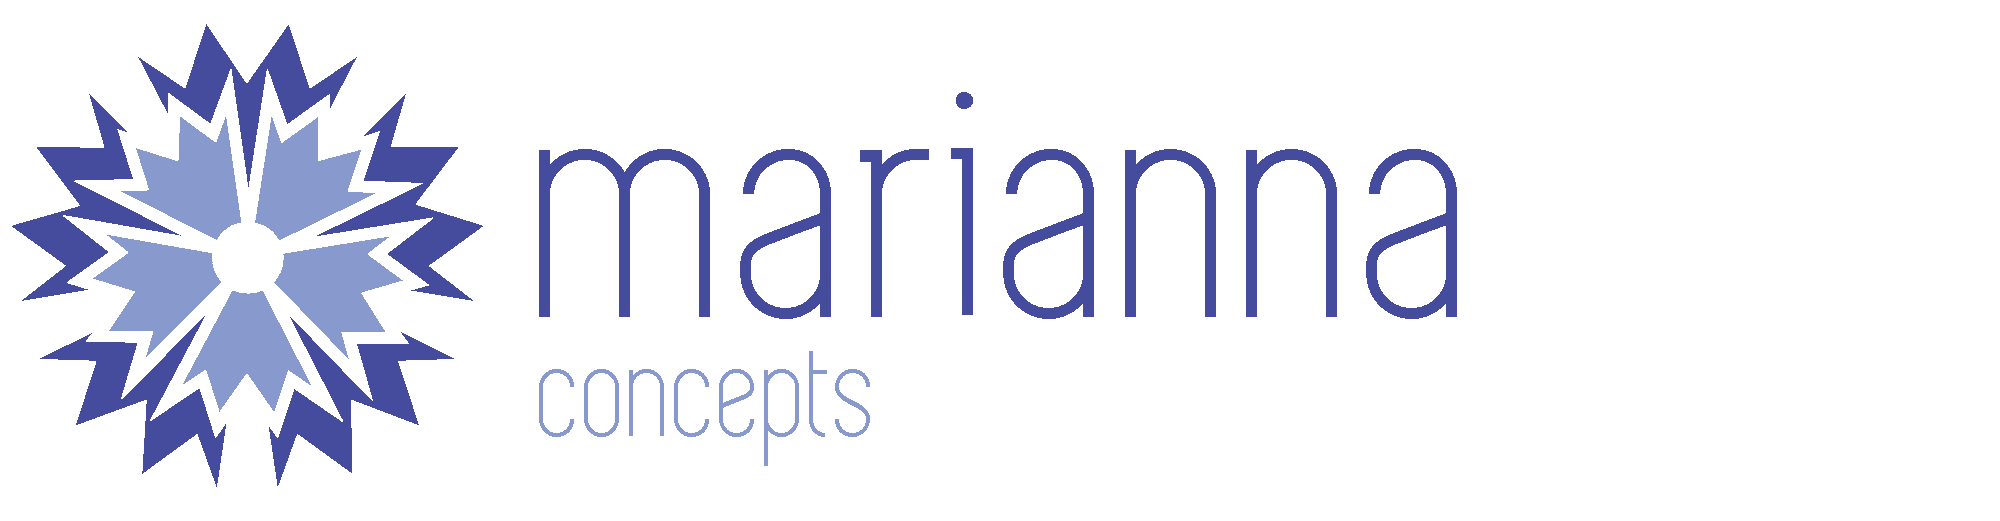 Marianna Concepts